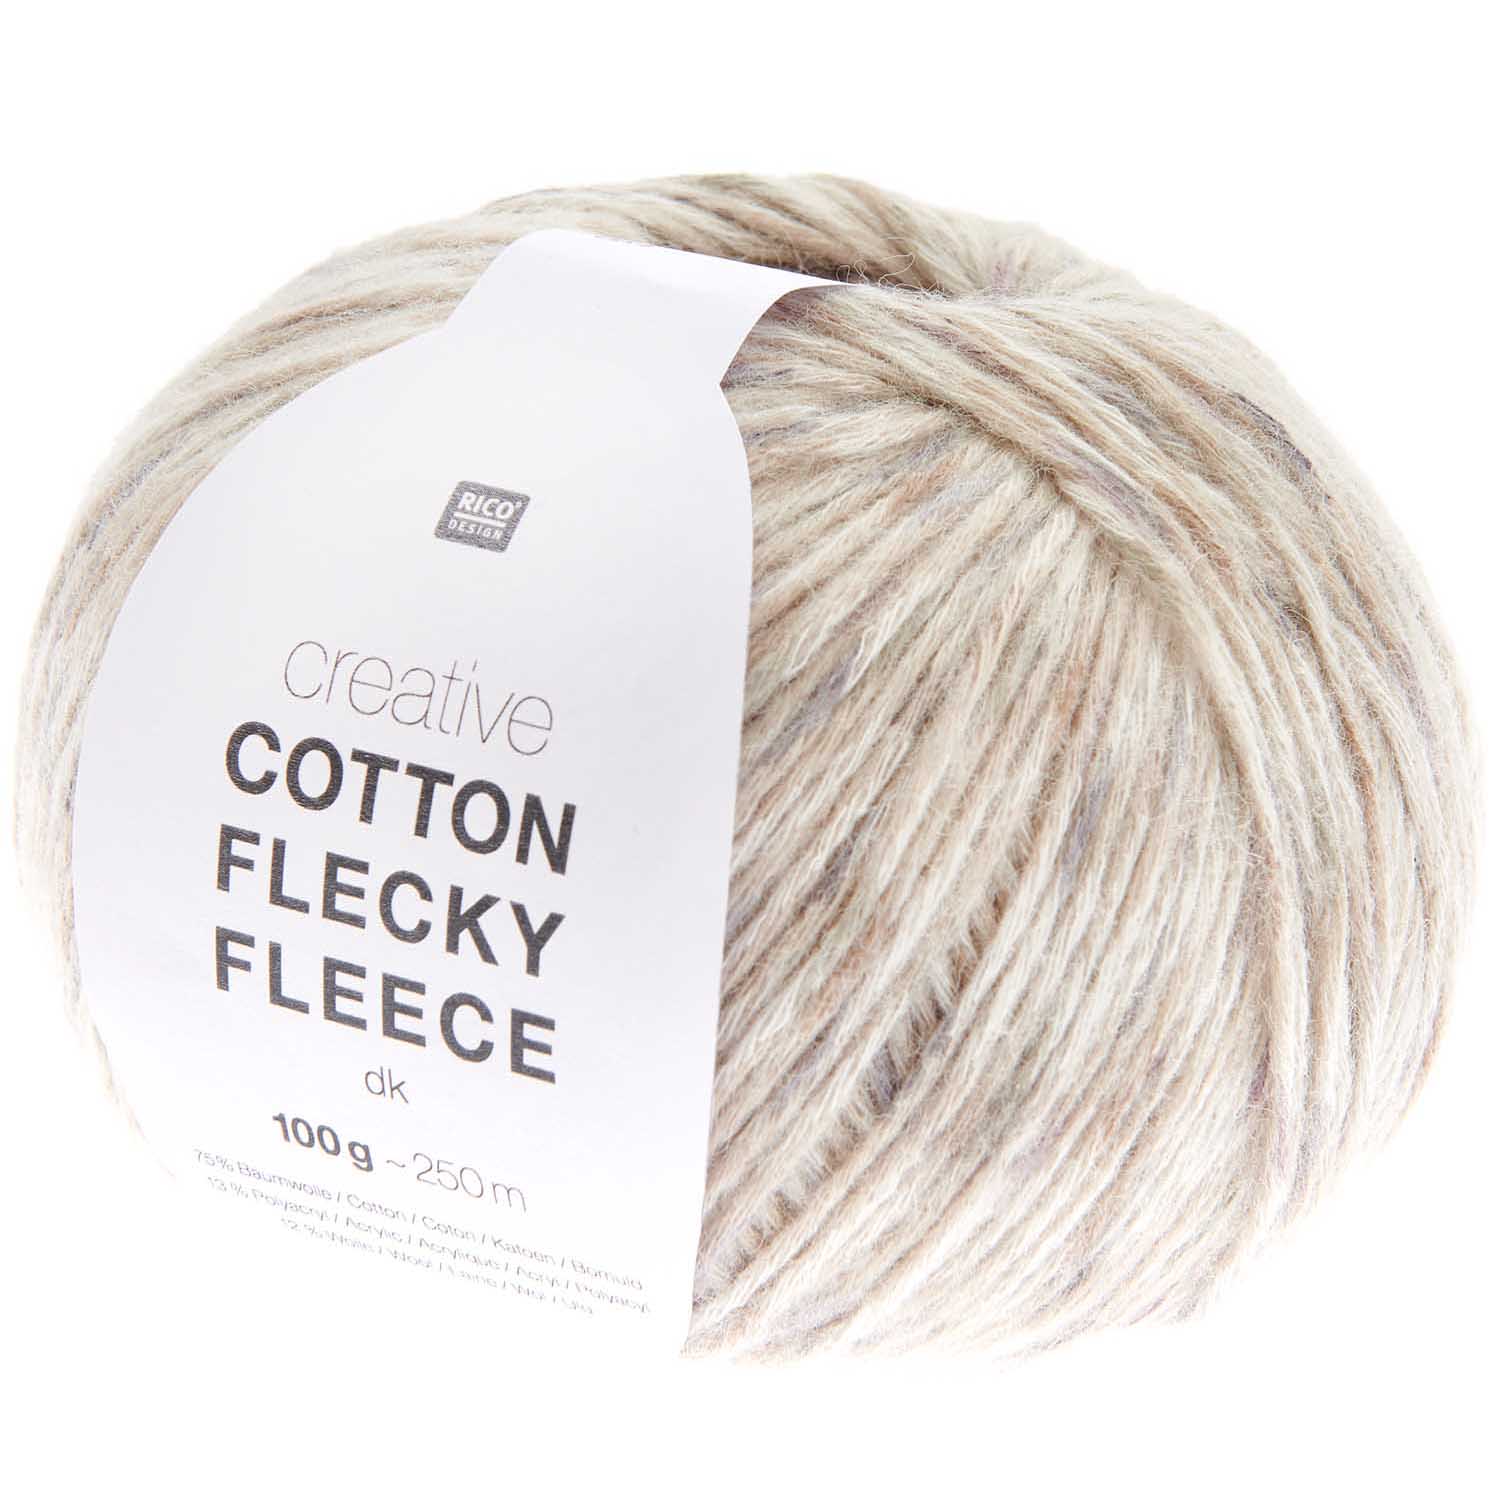 Cotton Flecky Fleece 001 Earthy